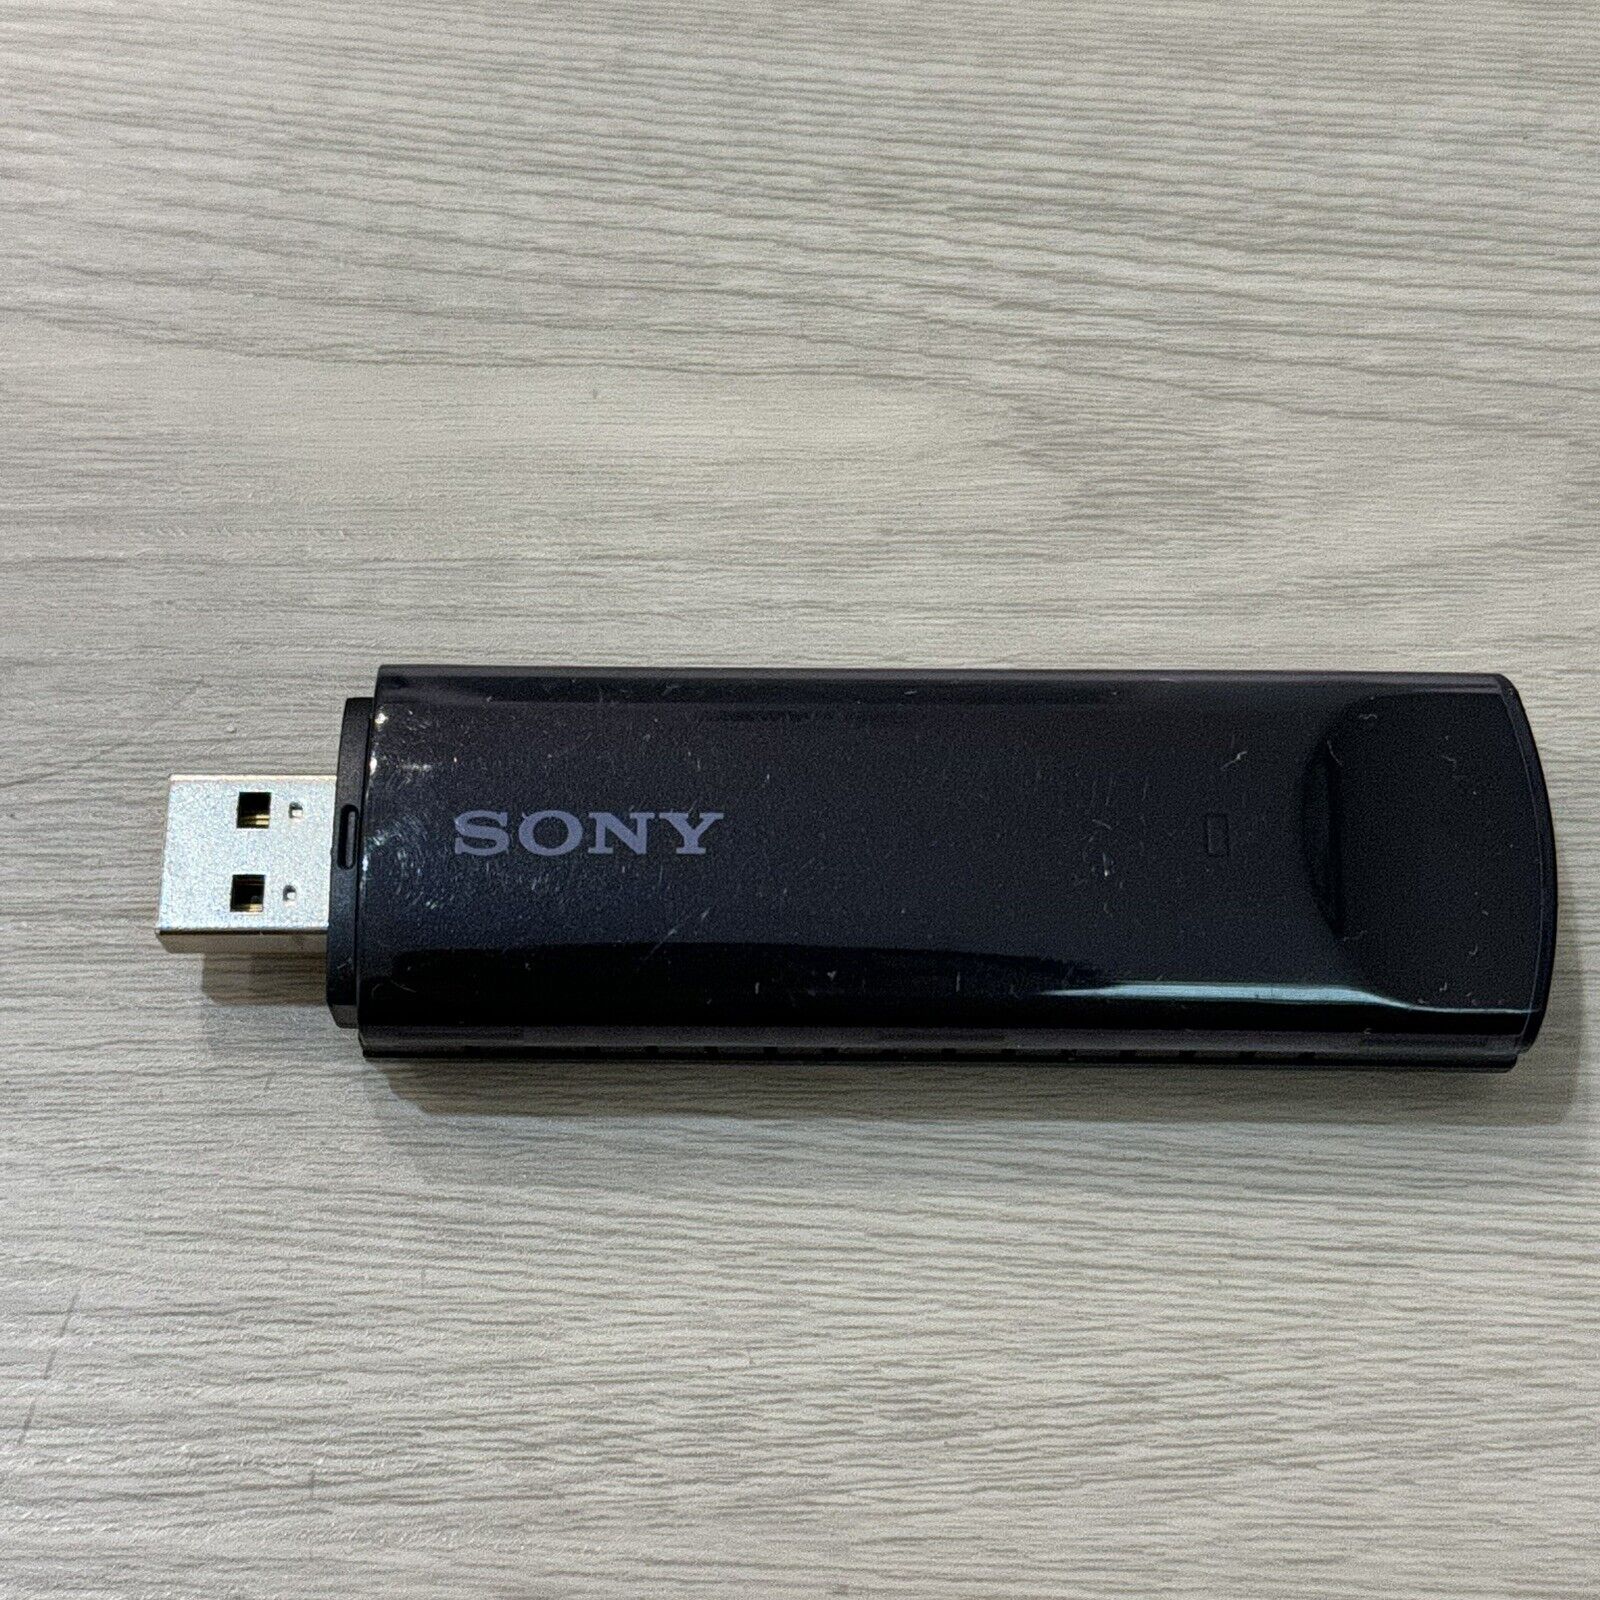 Sony UWA-BR100 Wi-Fi Network Adapter USB UWA-BR100 Stick ONLY